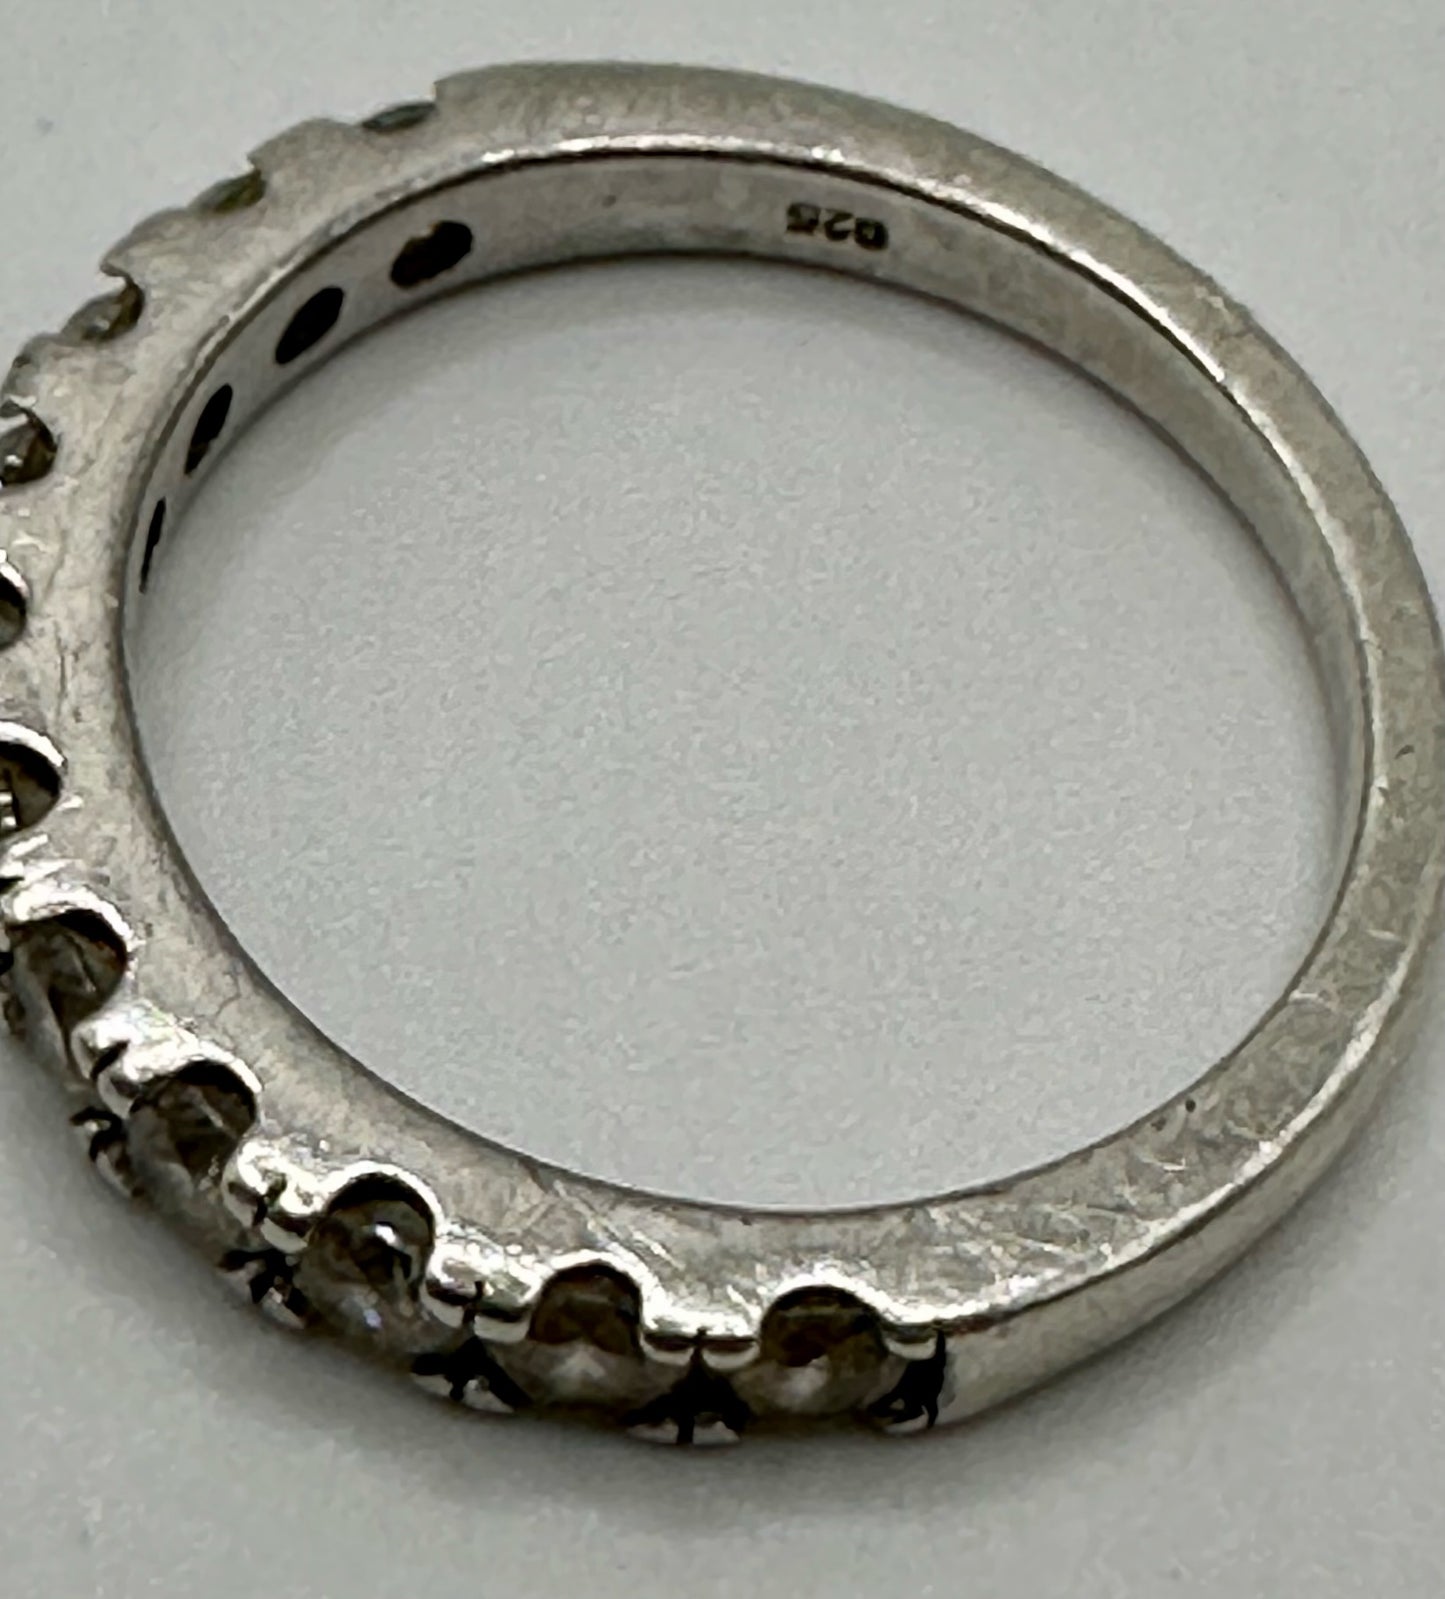 Sterling Silver 925 CZ Band Ring Sz 7.5 IBB CN